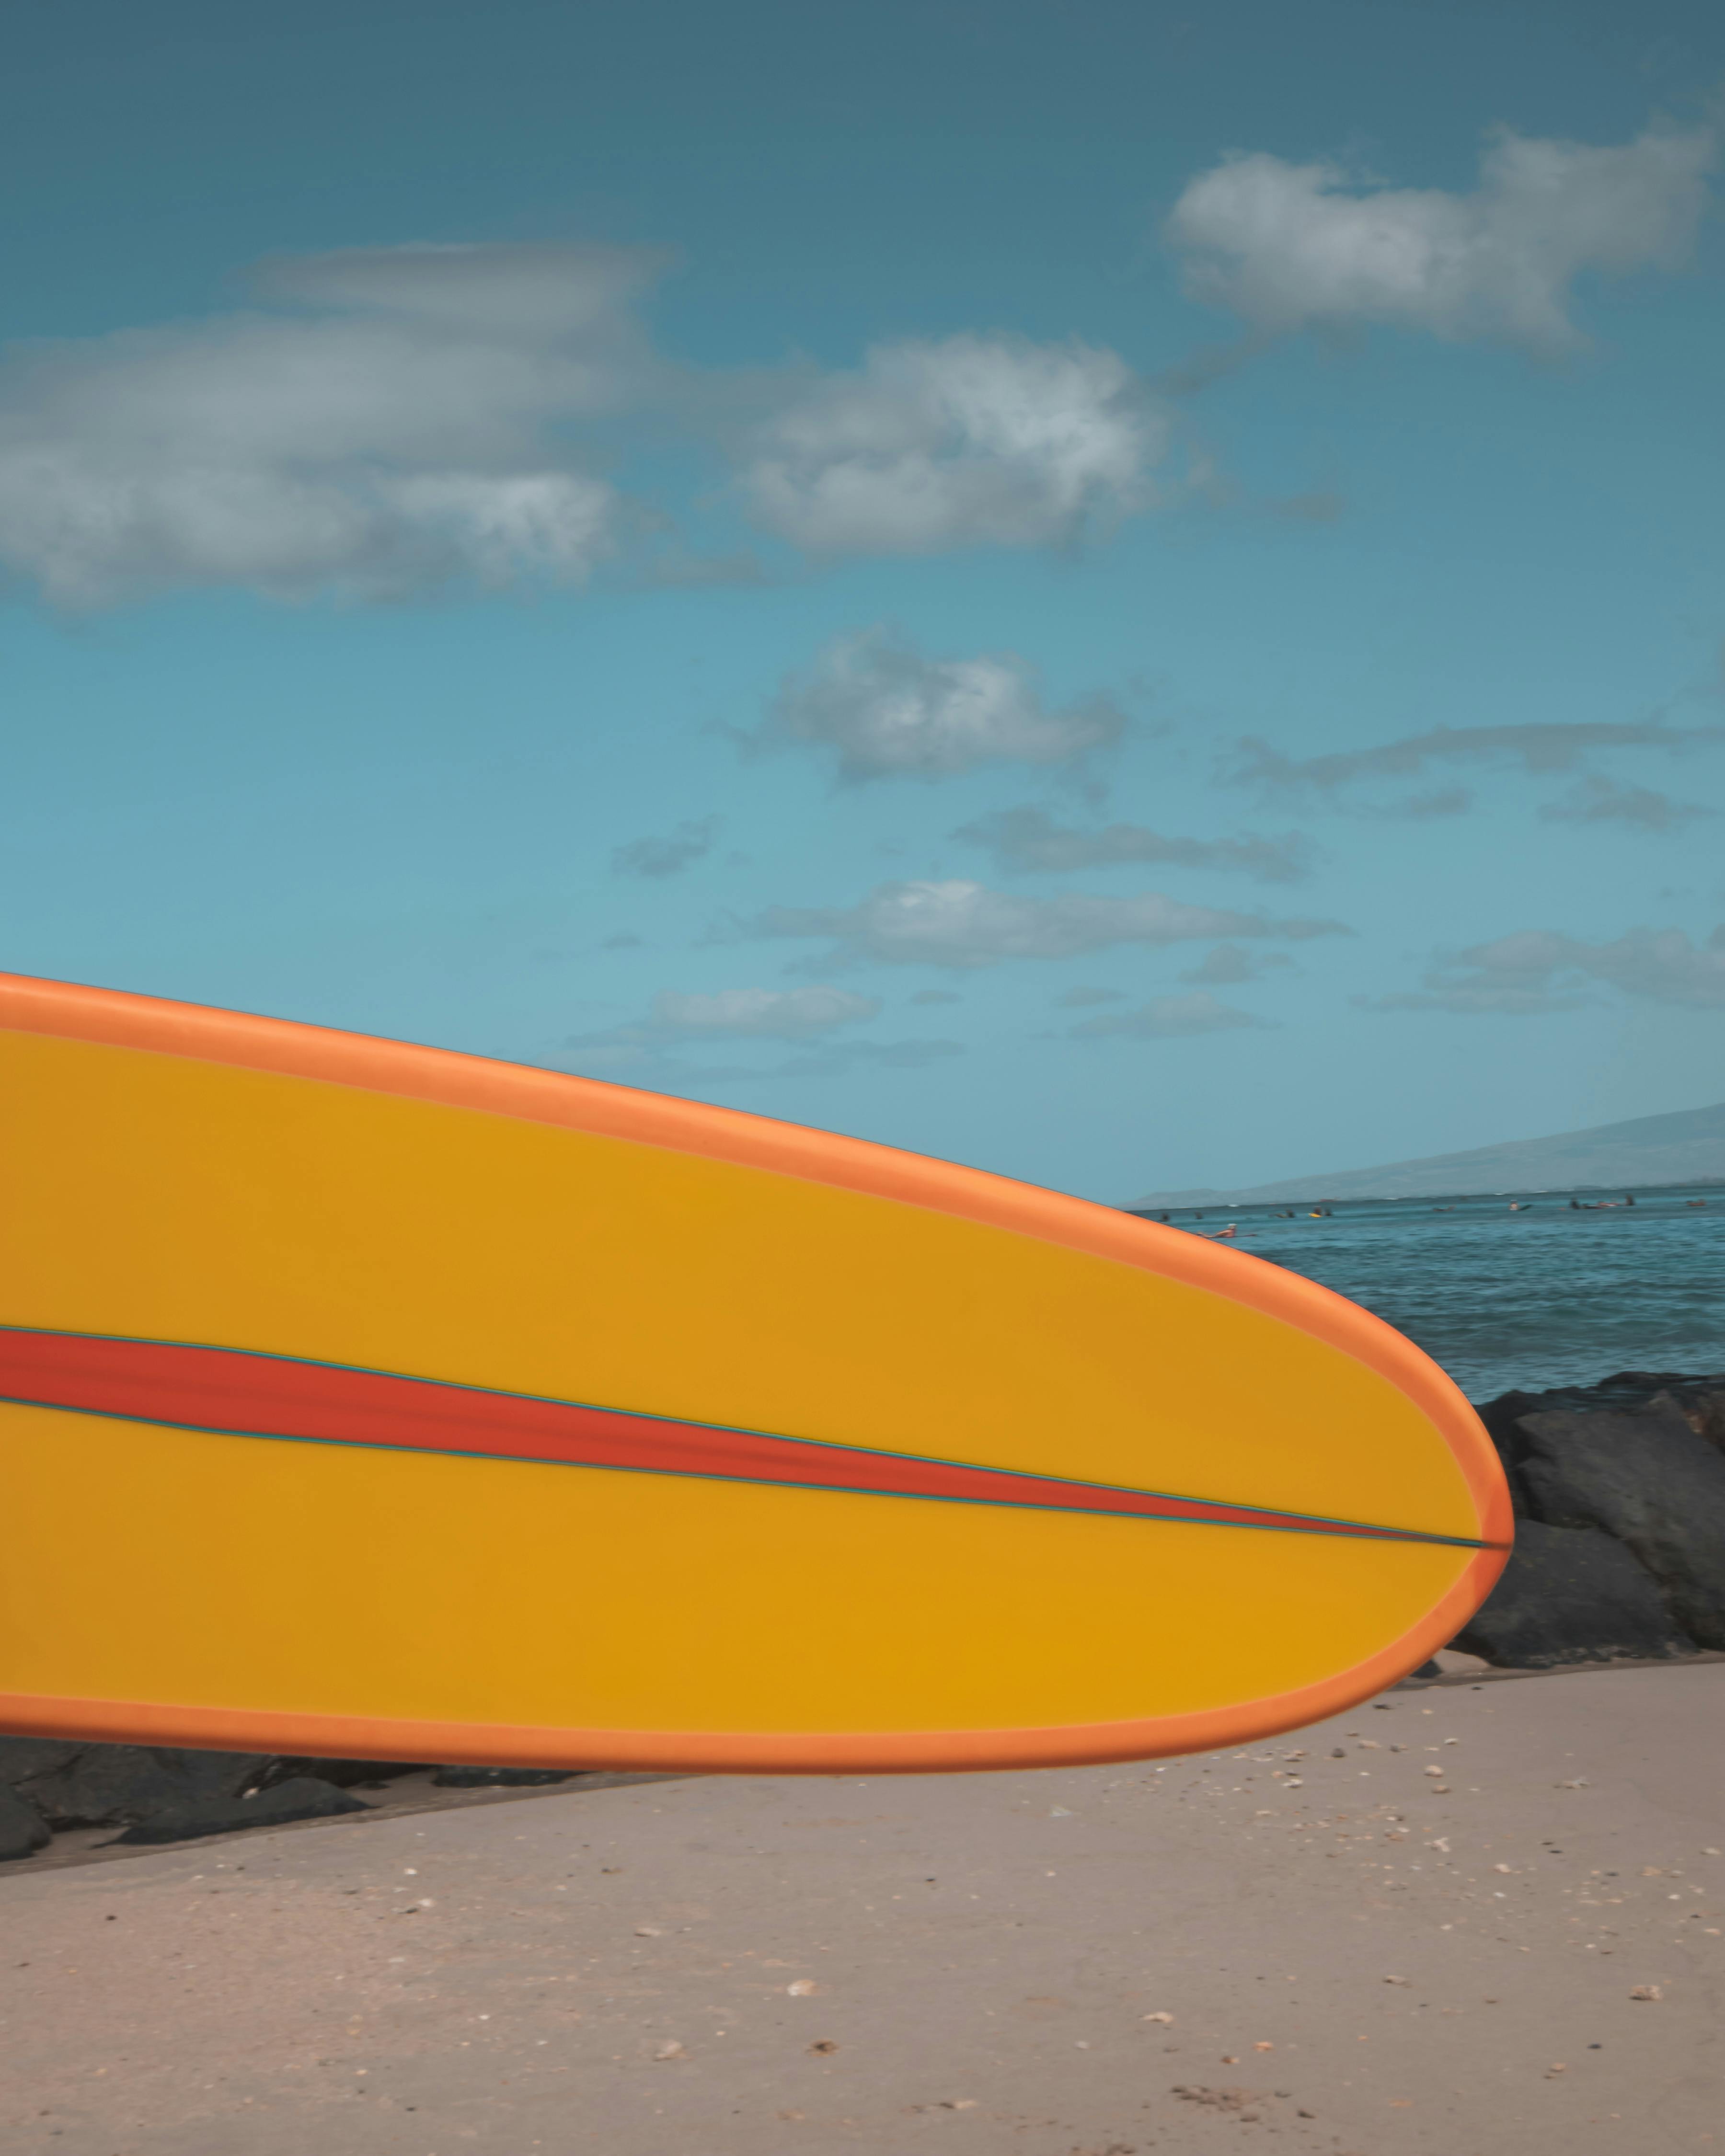 orange surfboard on beach shore